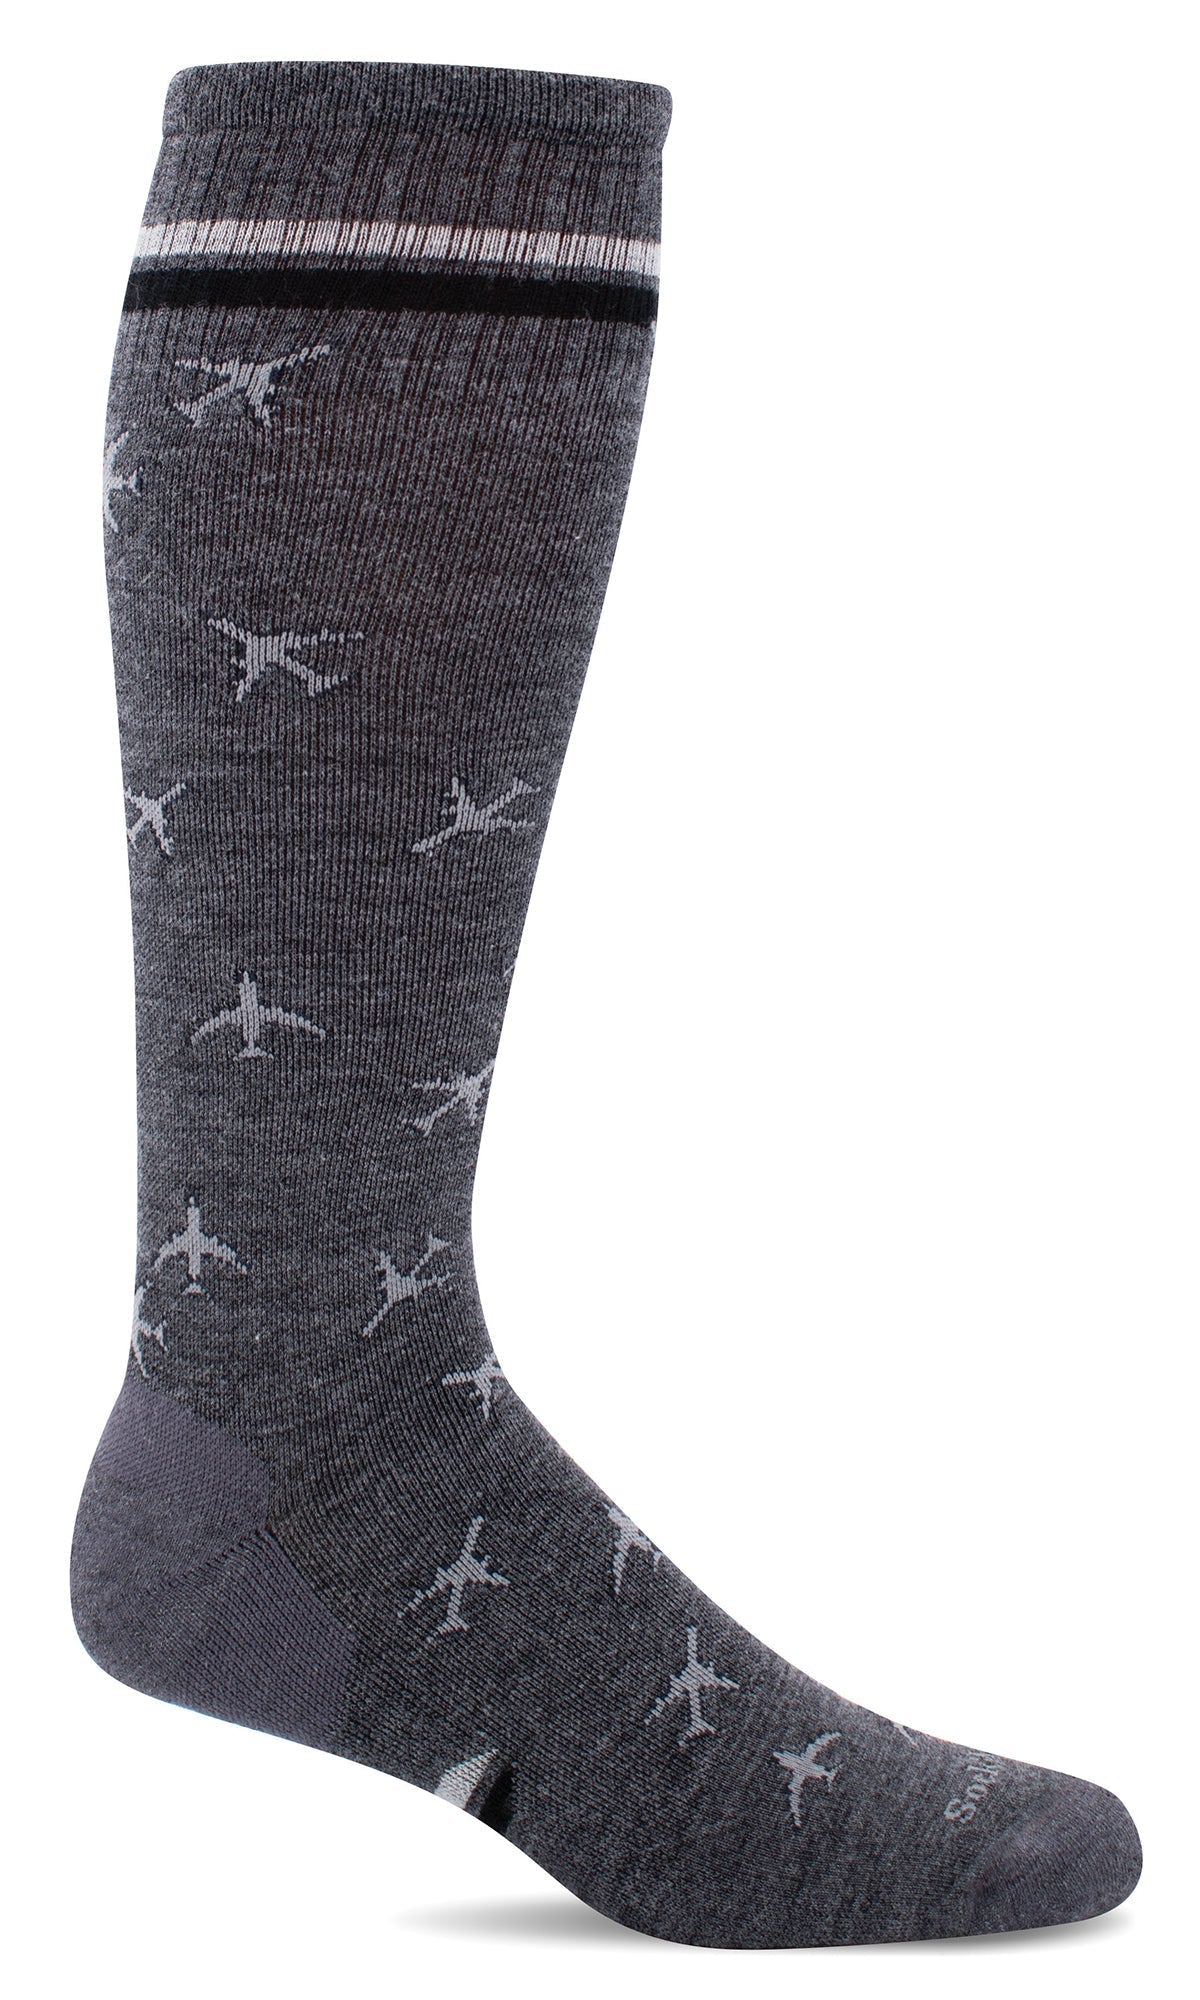 Flightmode Flight Socks - Large